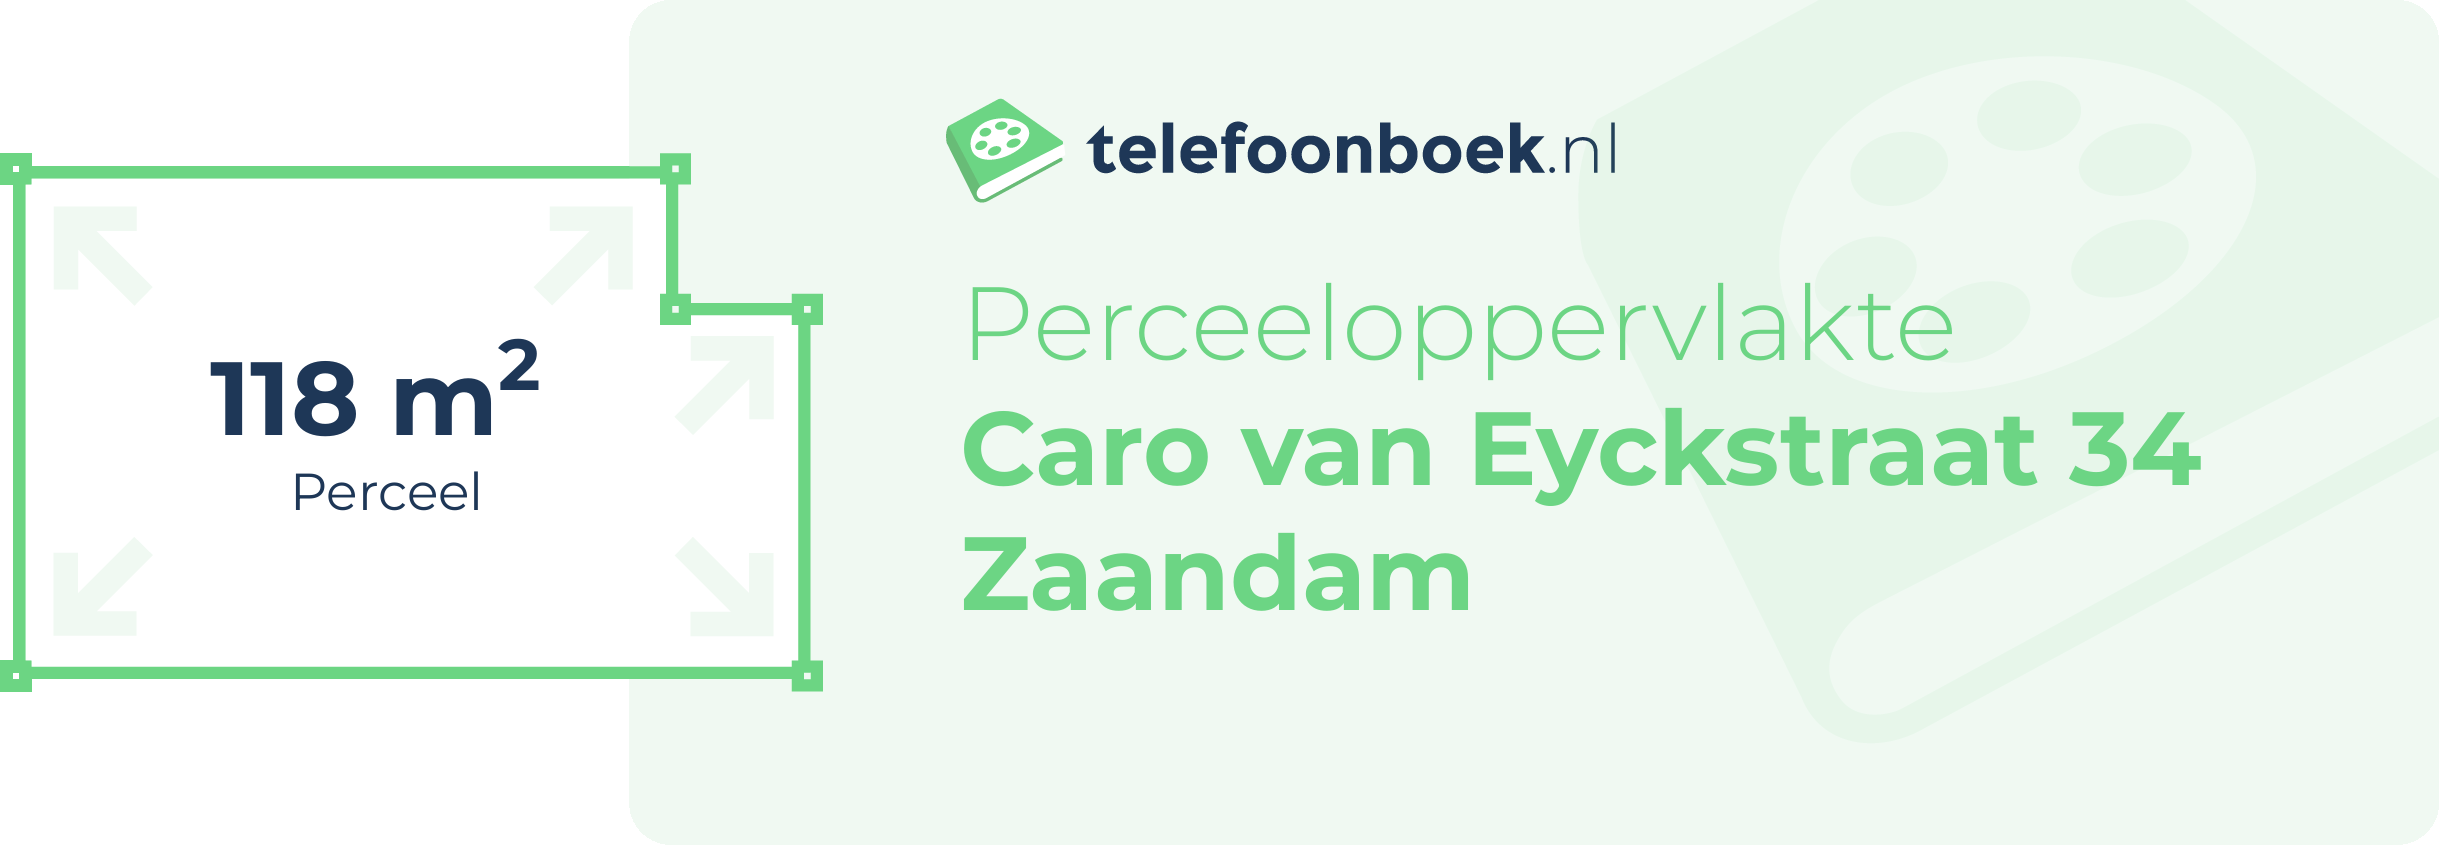 Perceeloppervlakte Caro Van Eyckstraat 34 Zaandam